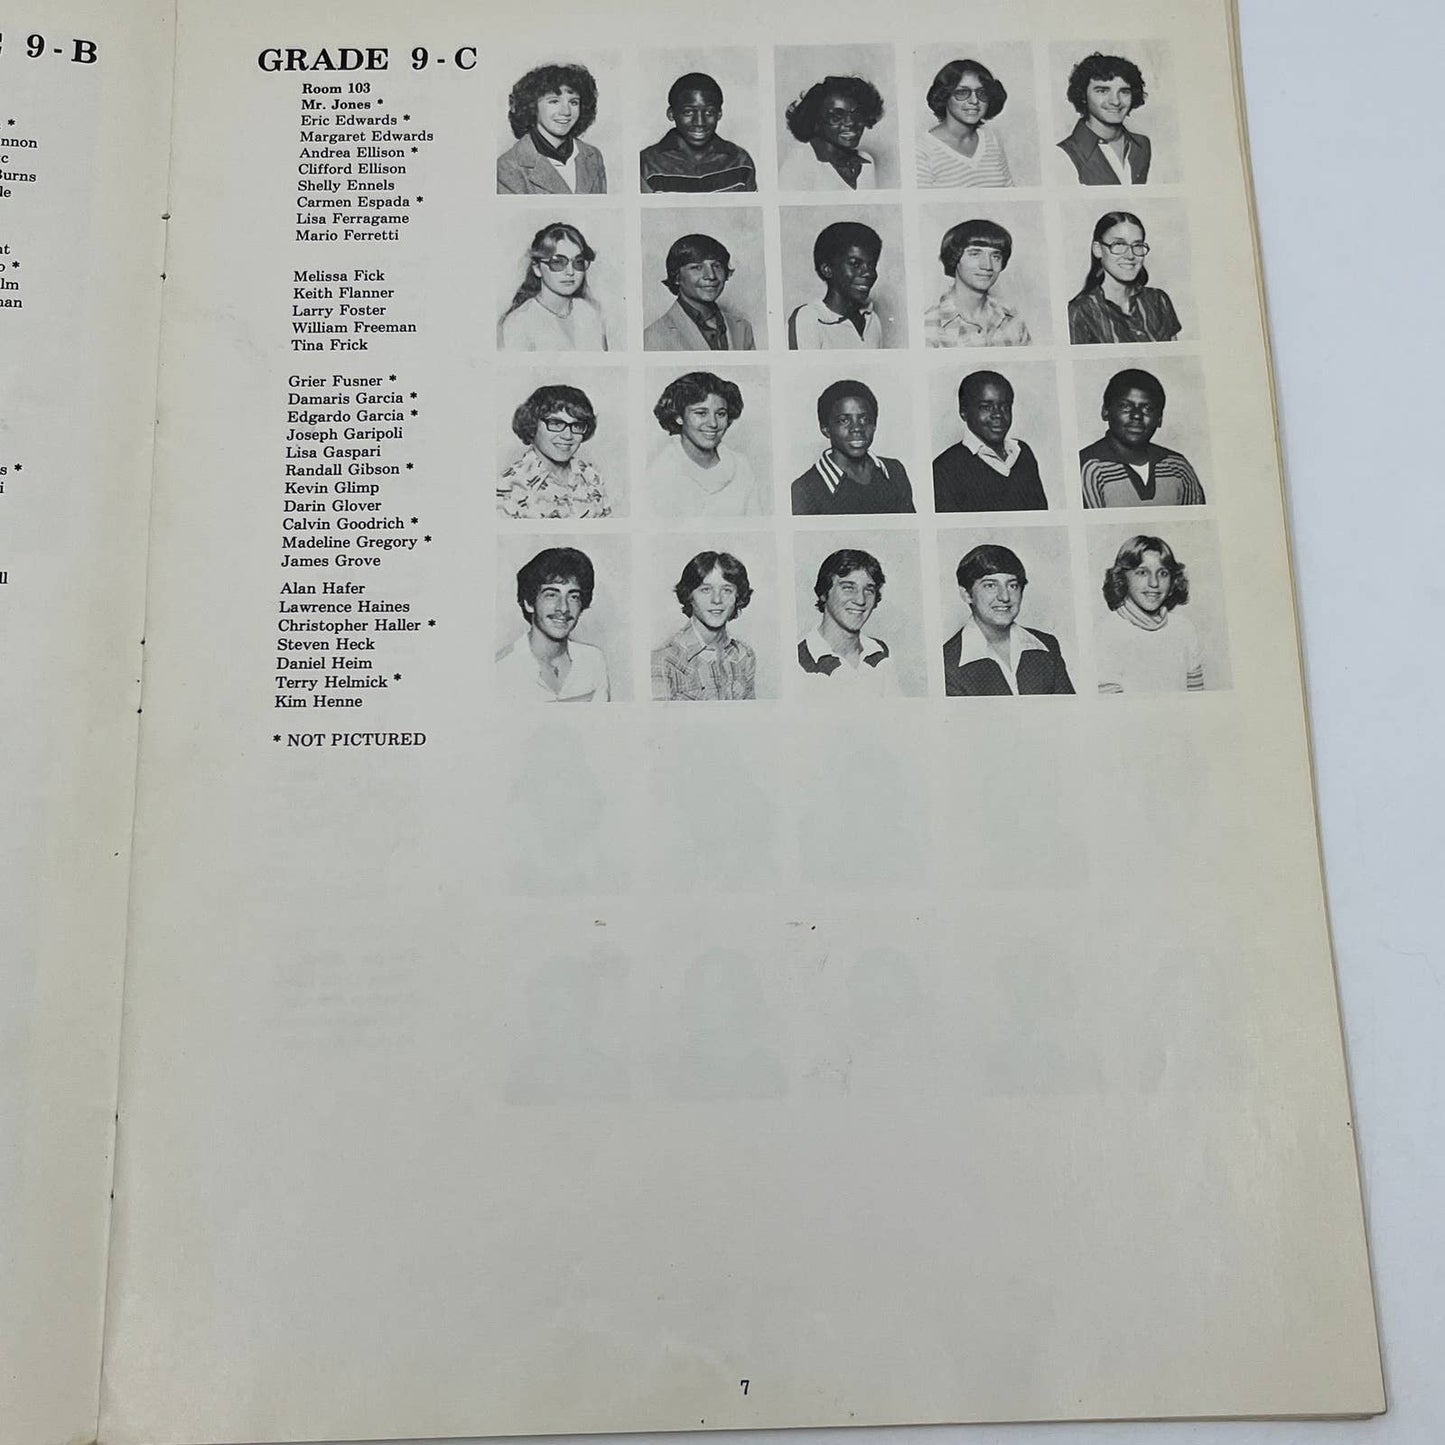 1979-1980 Northwest Junior High School Yearbook Reading PA TG2-1